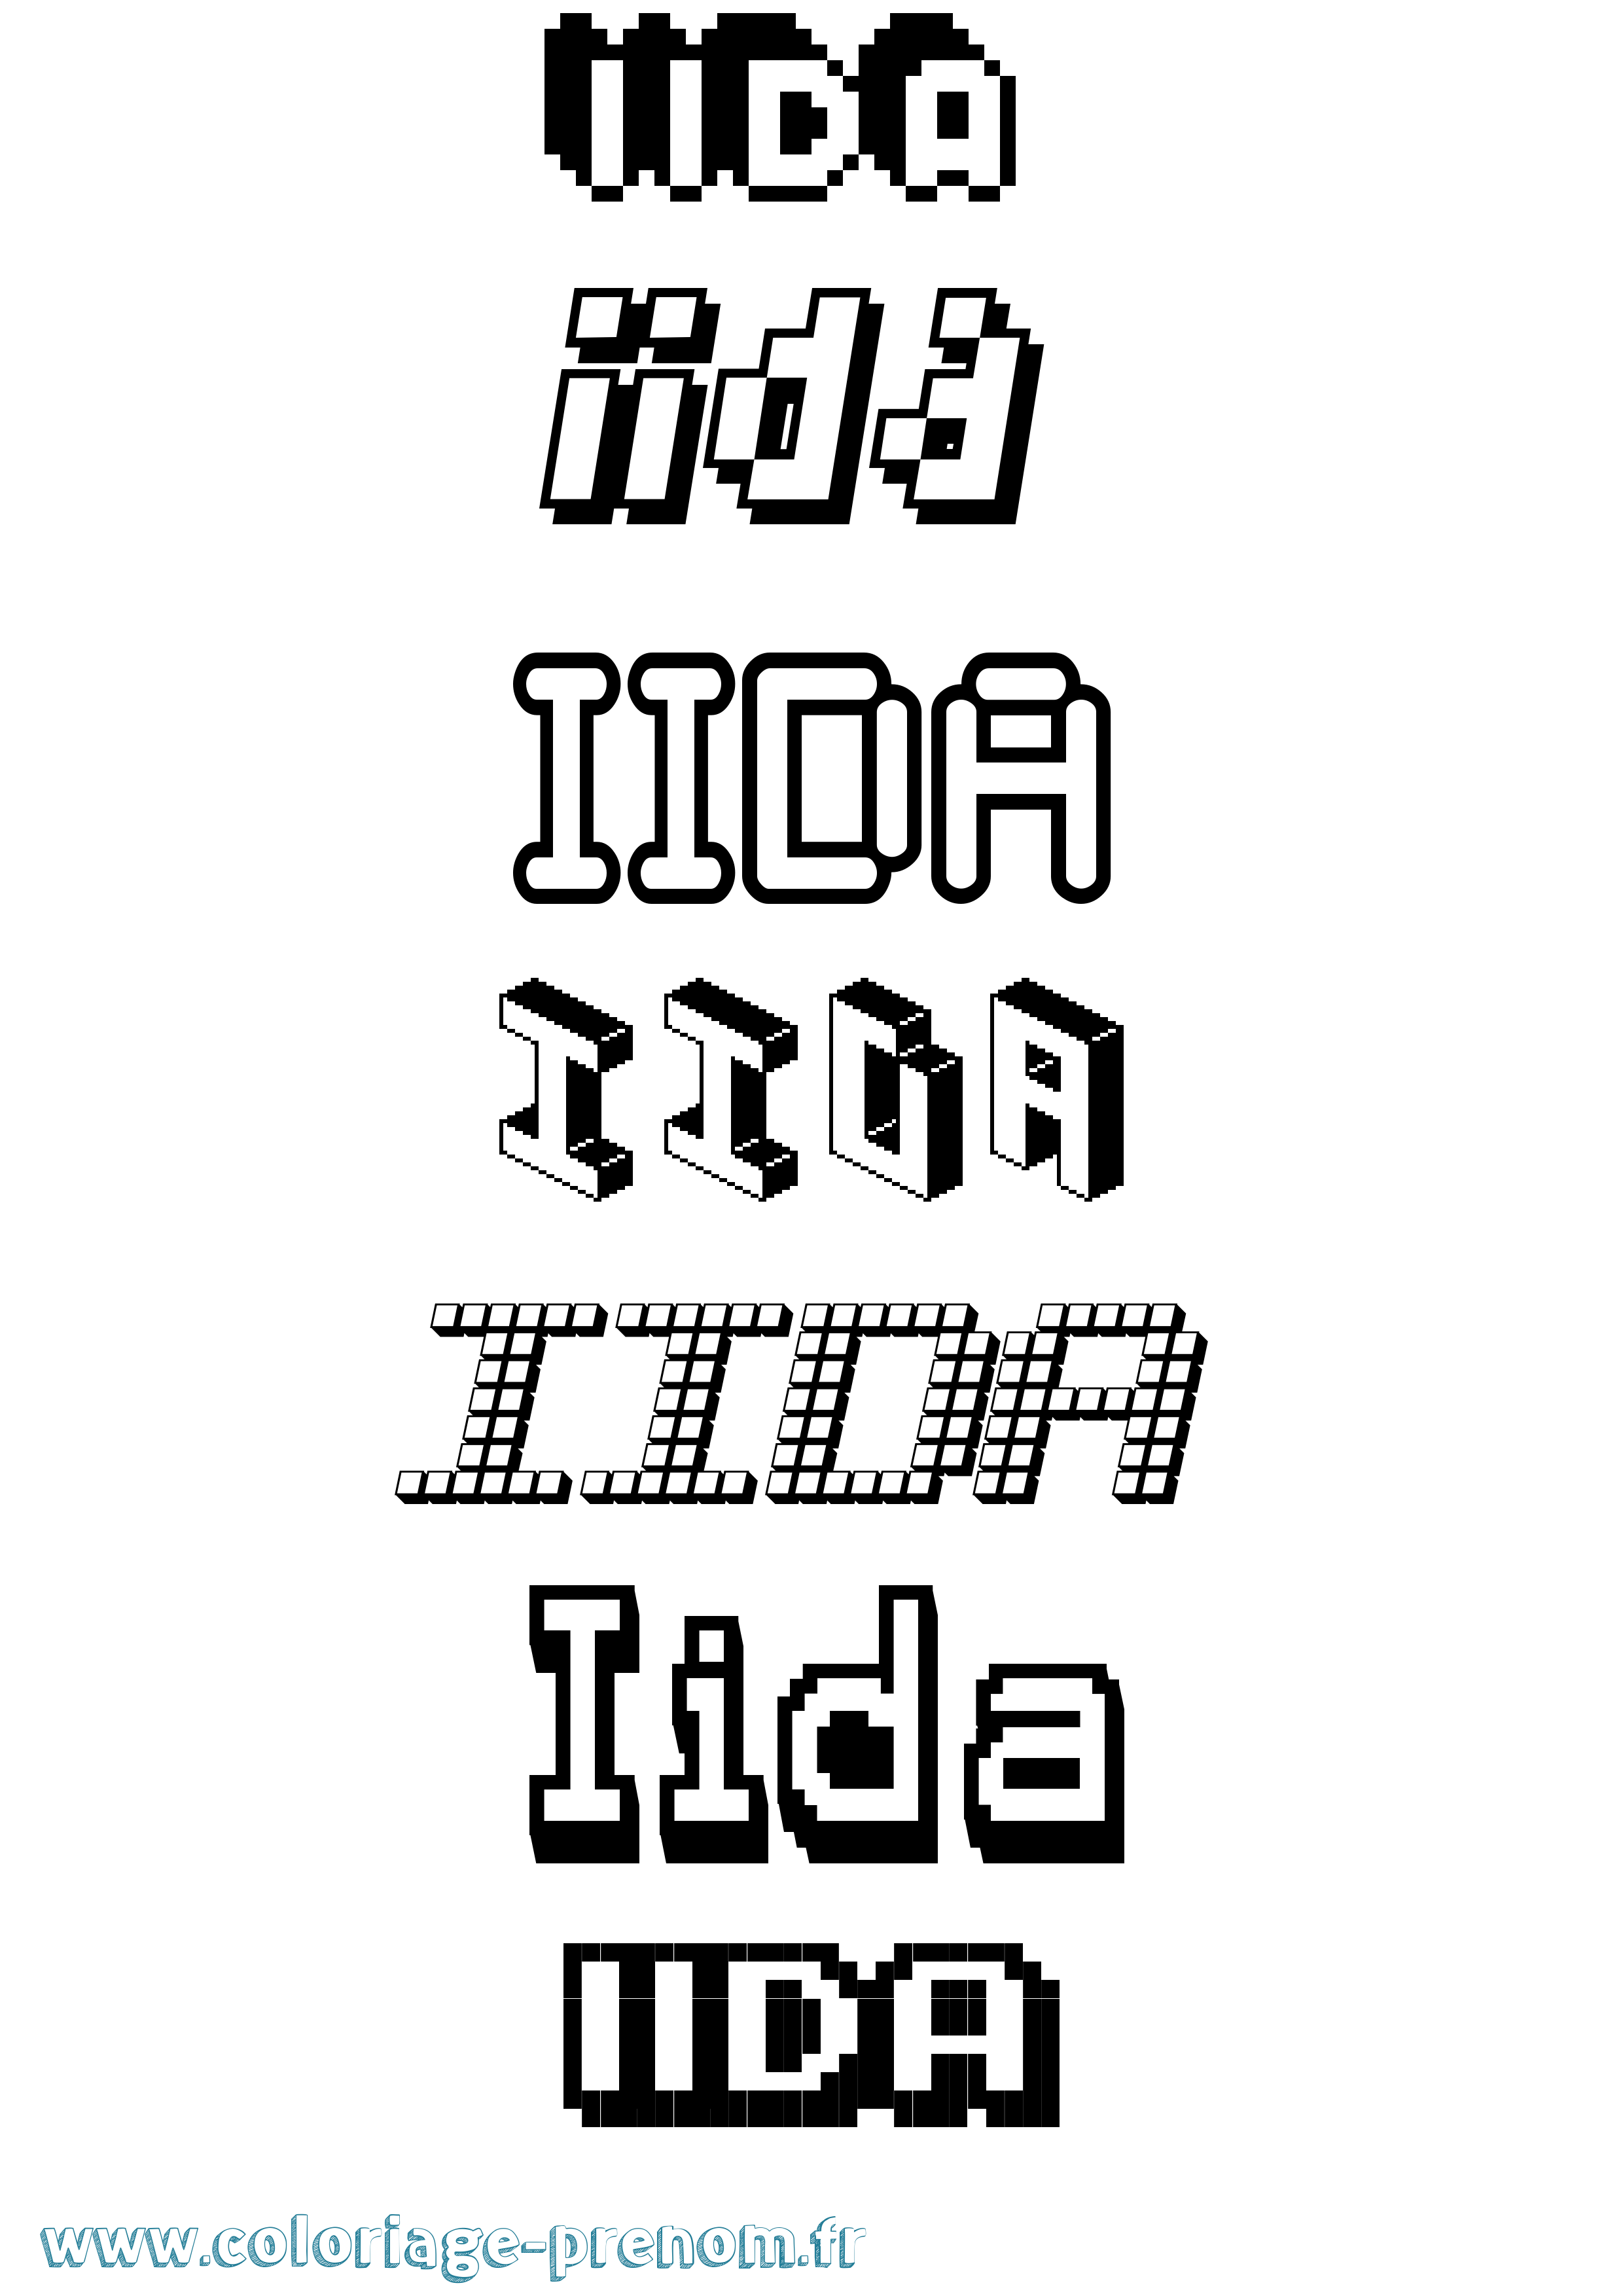 Coloriage prénom Iida Pixel